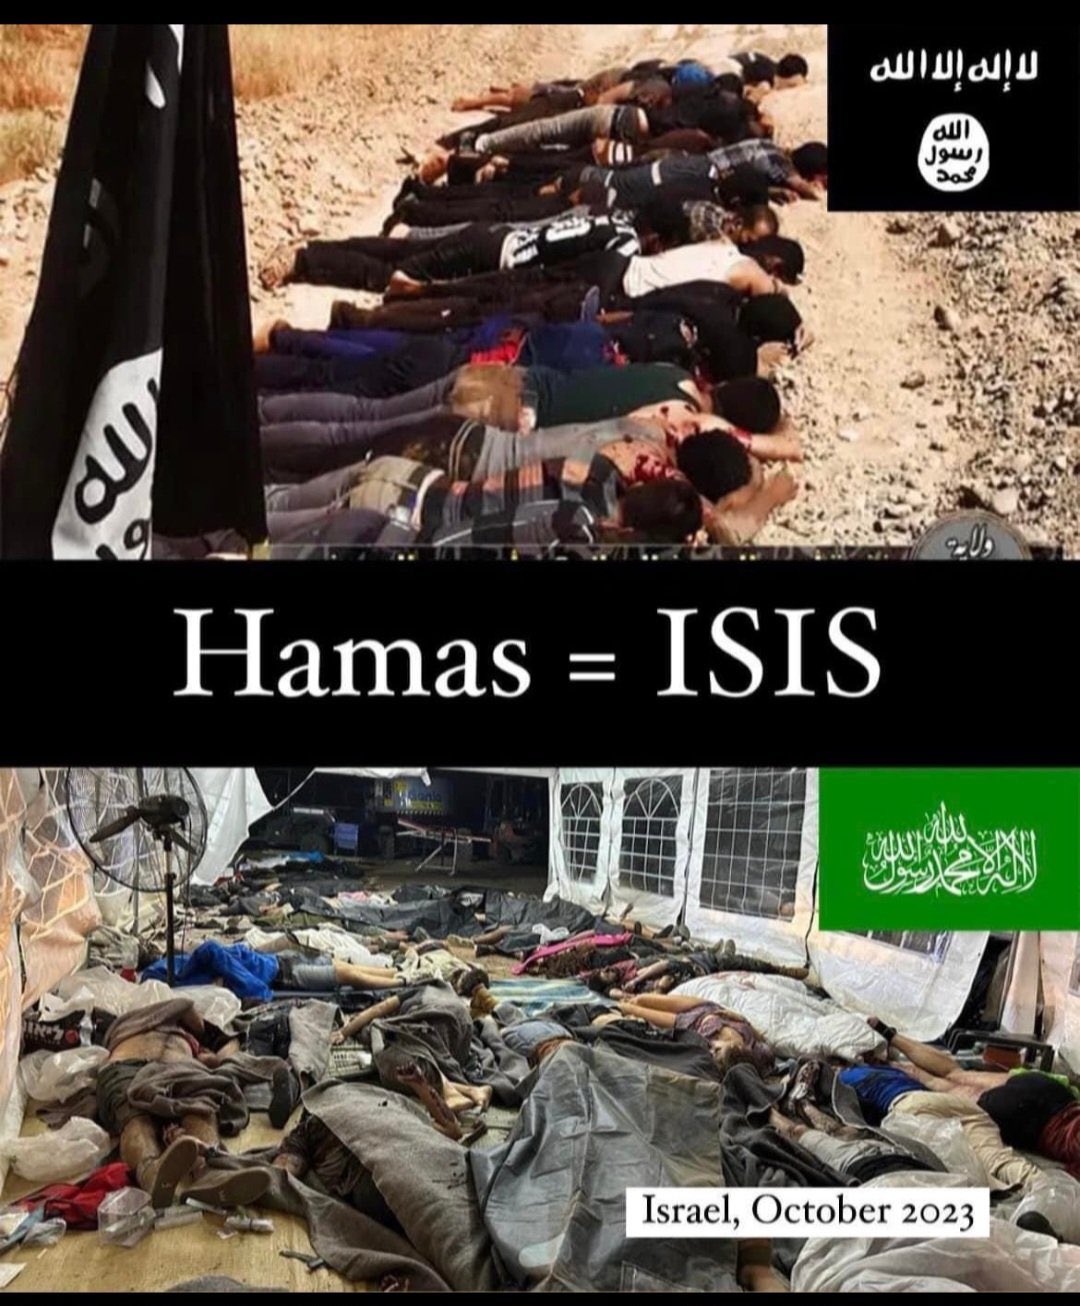 Hams is ISIS dead bodies